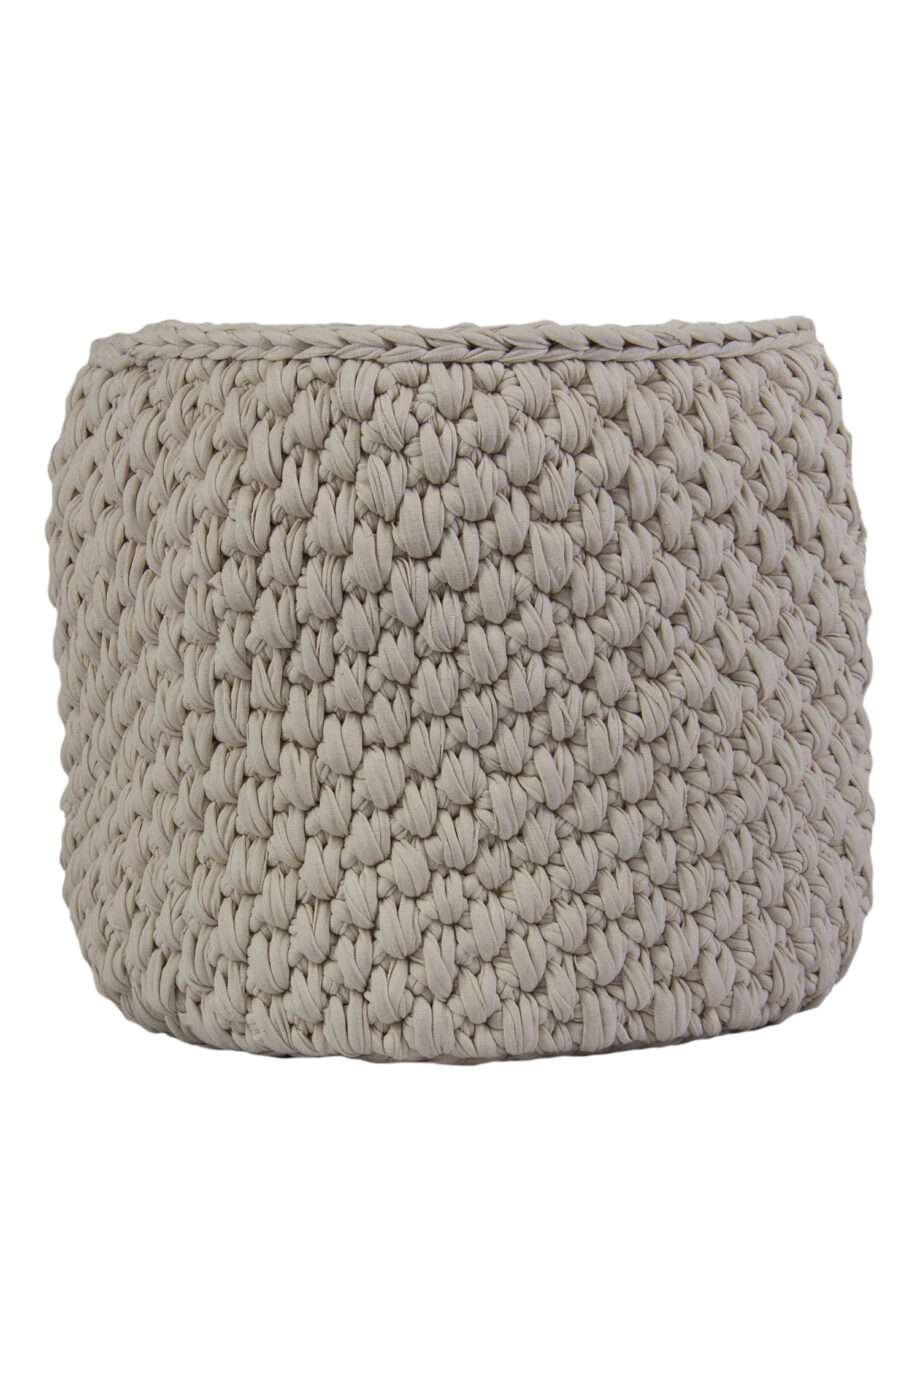 peony blush rose crochet cotton basket large